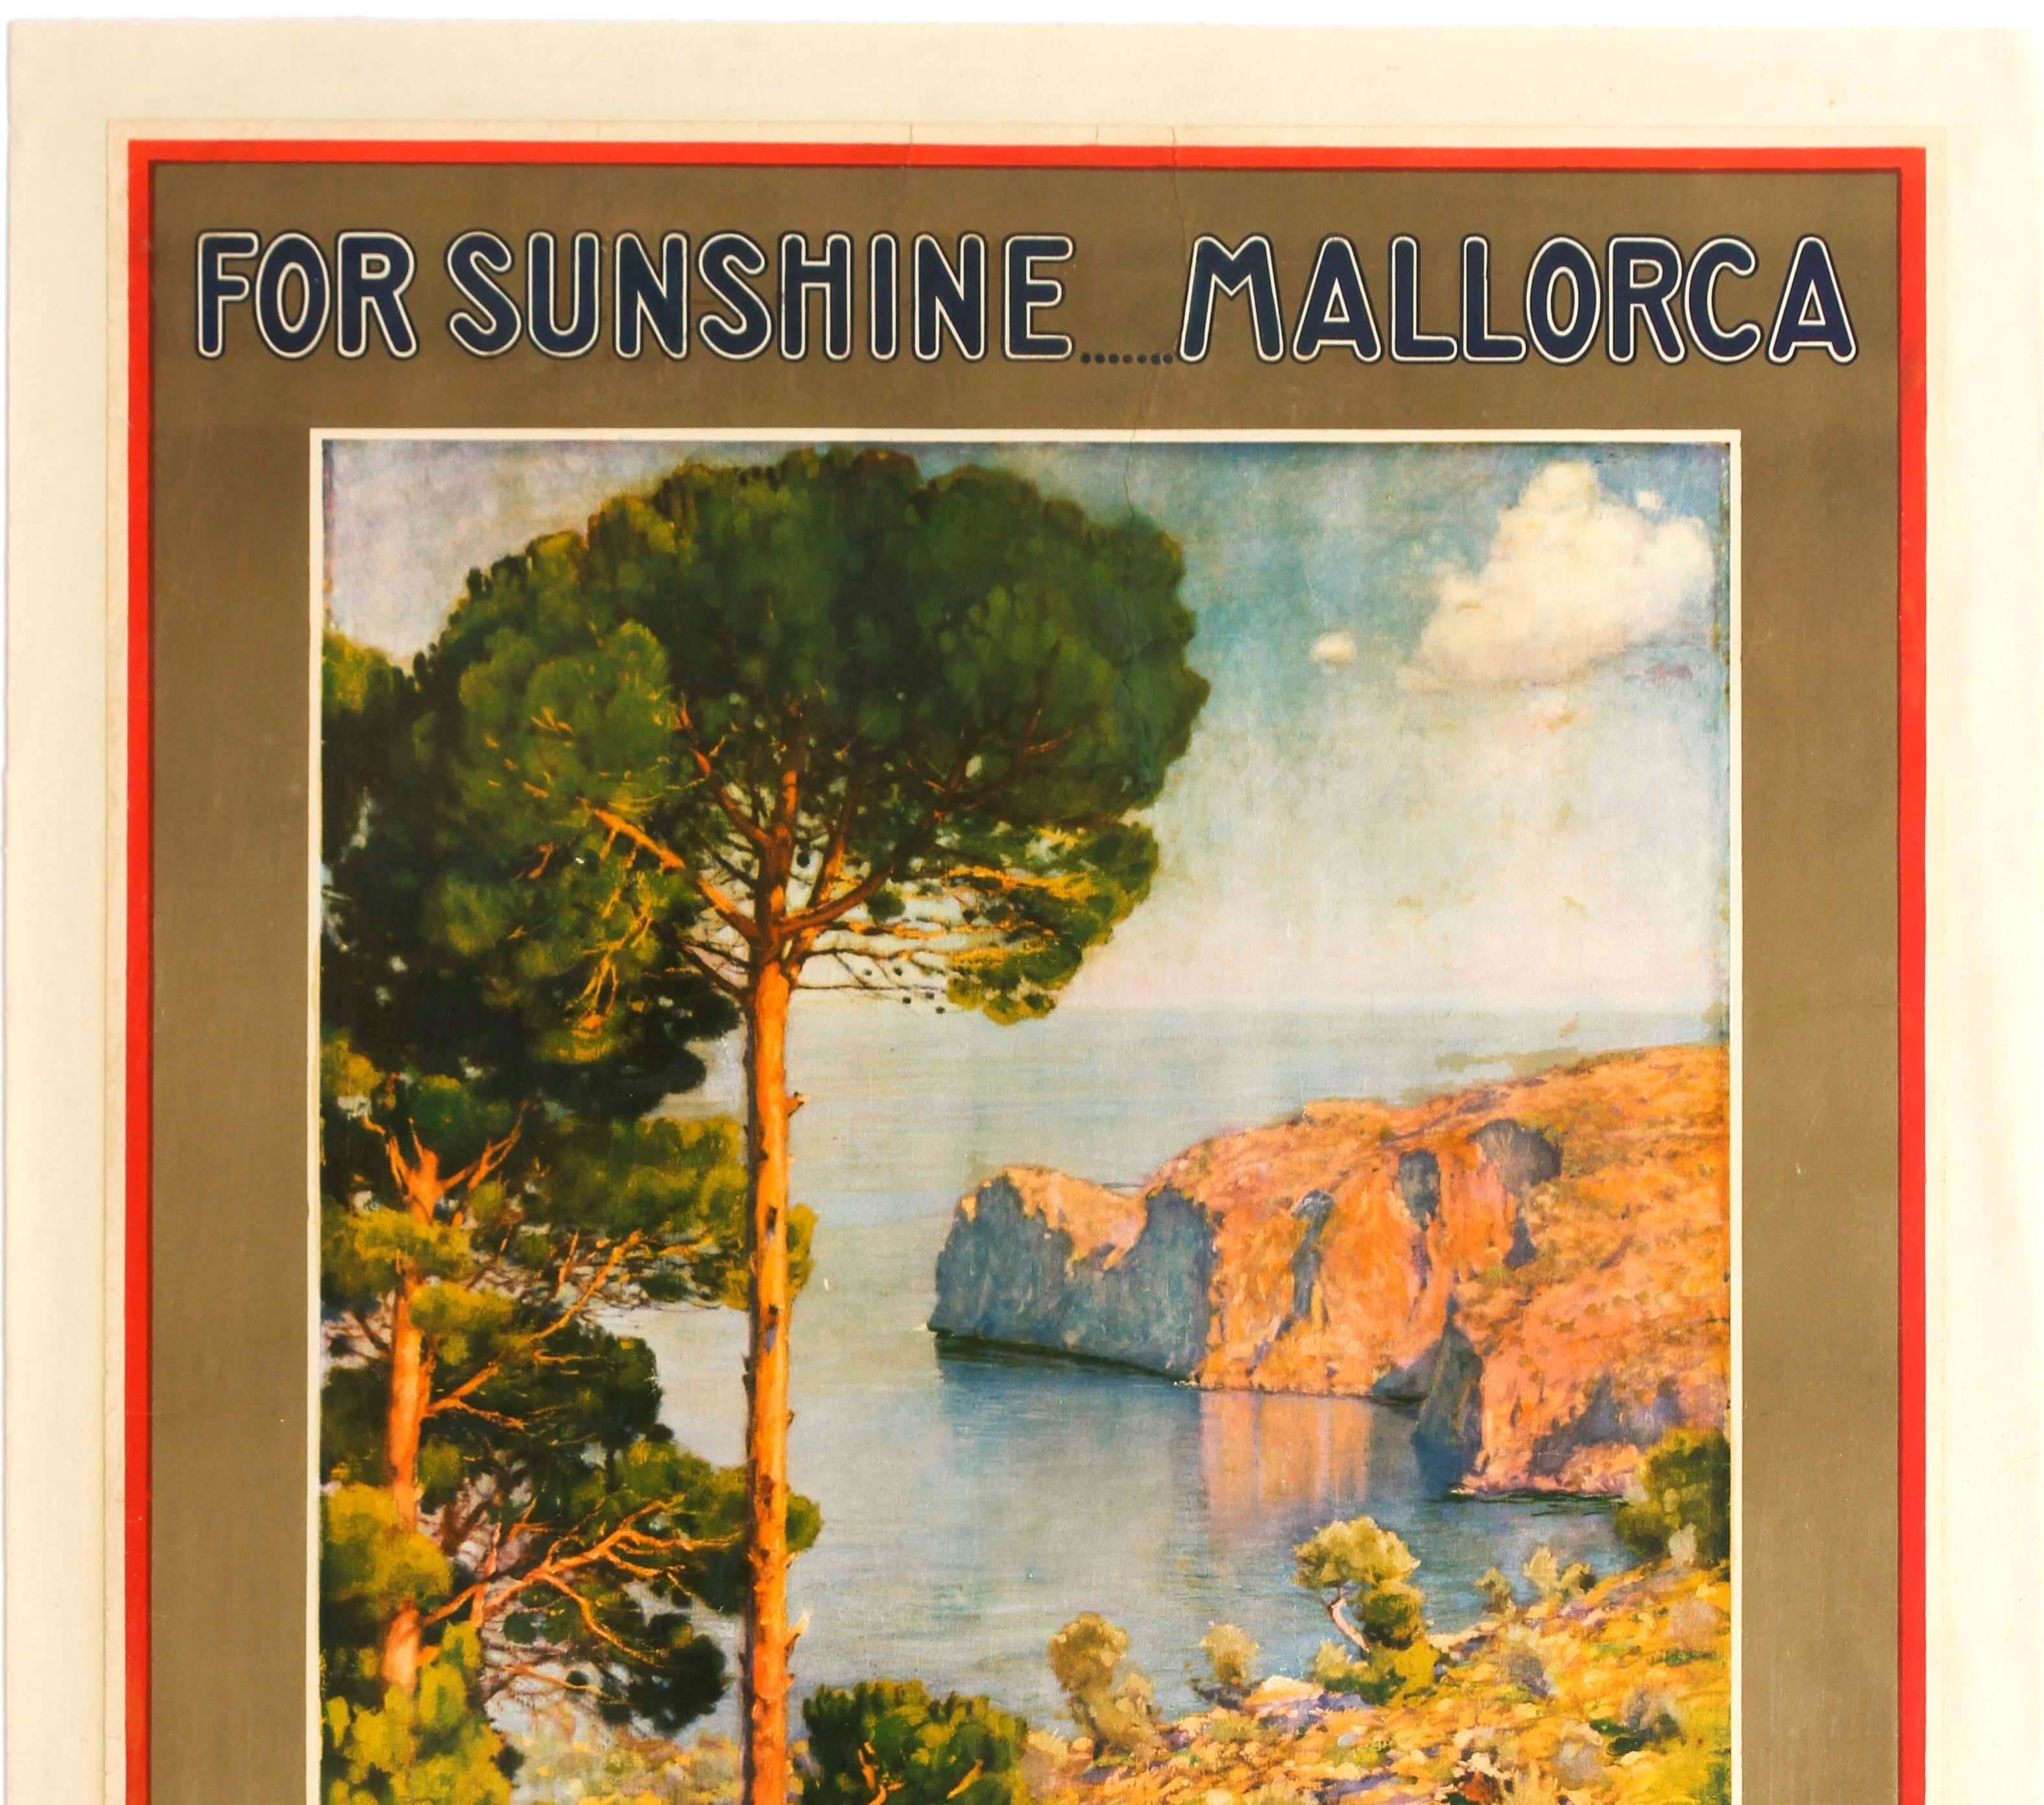 Original Vintage Poster - For Sunshine Mallorca - Travel Mediterranean Sea Spain - Print by Erwin Hubert